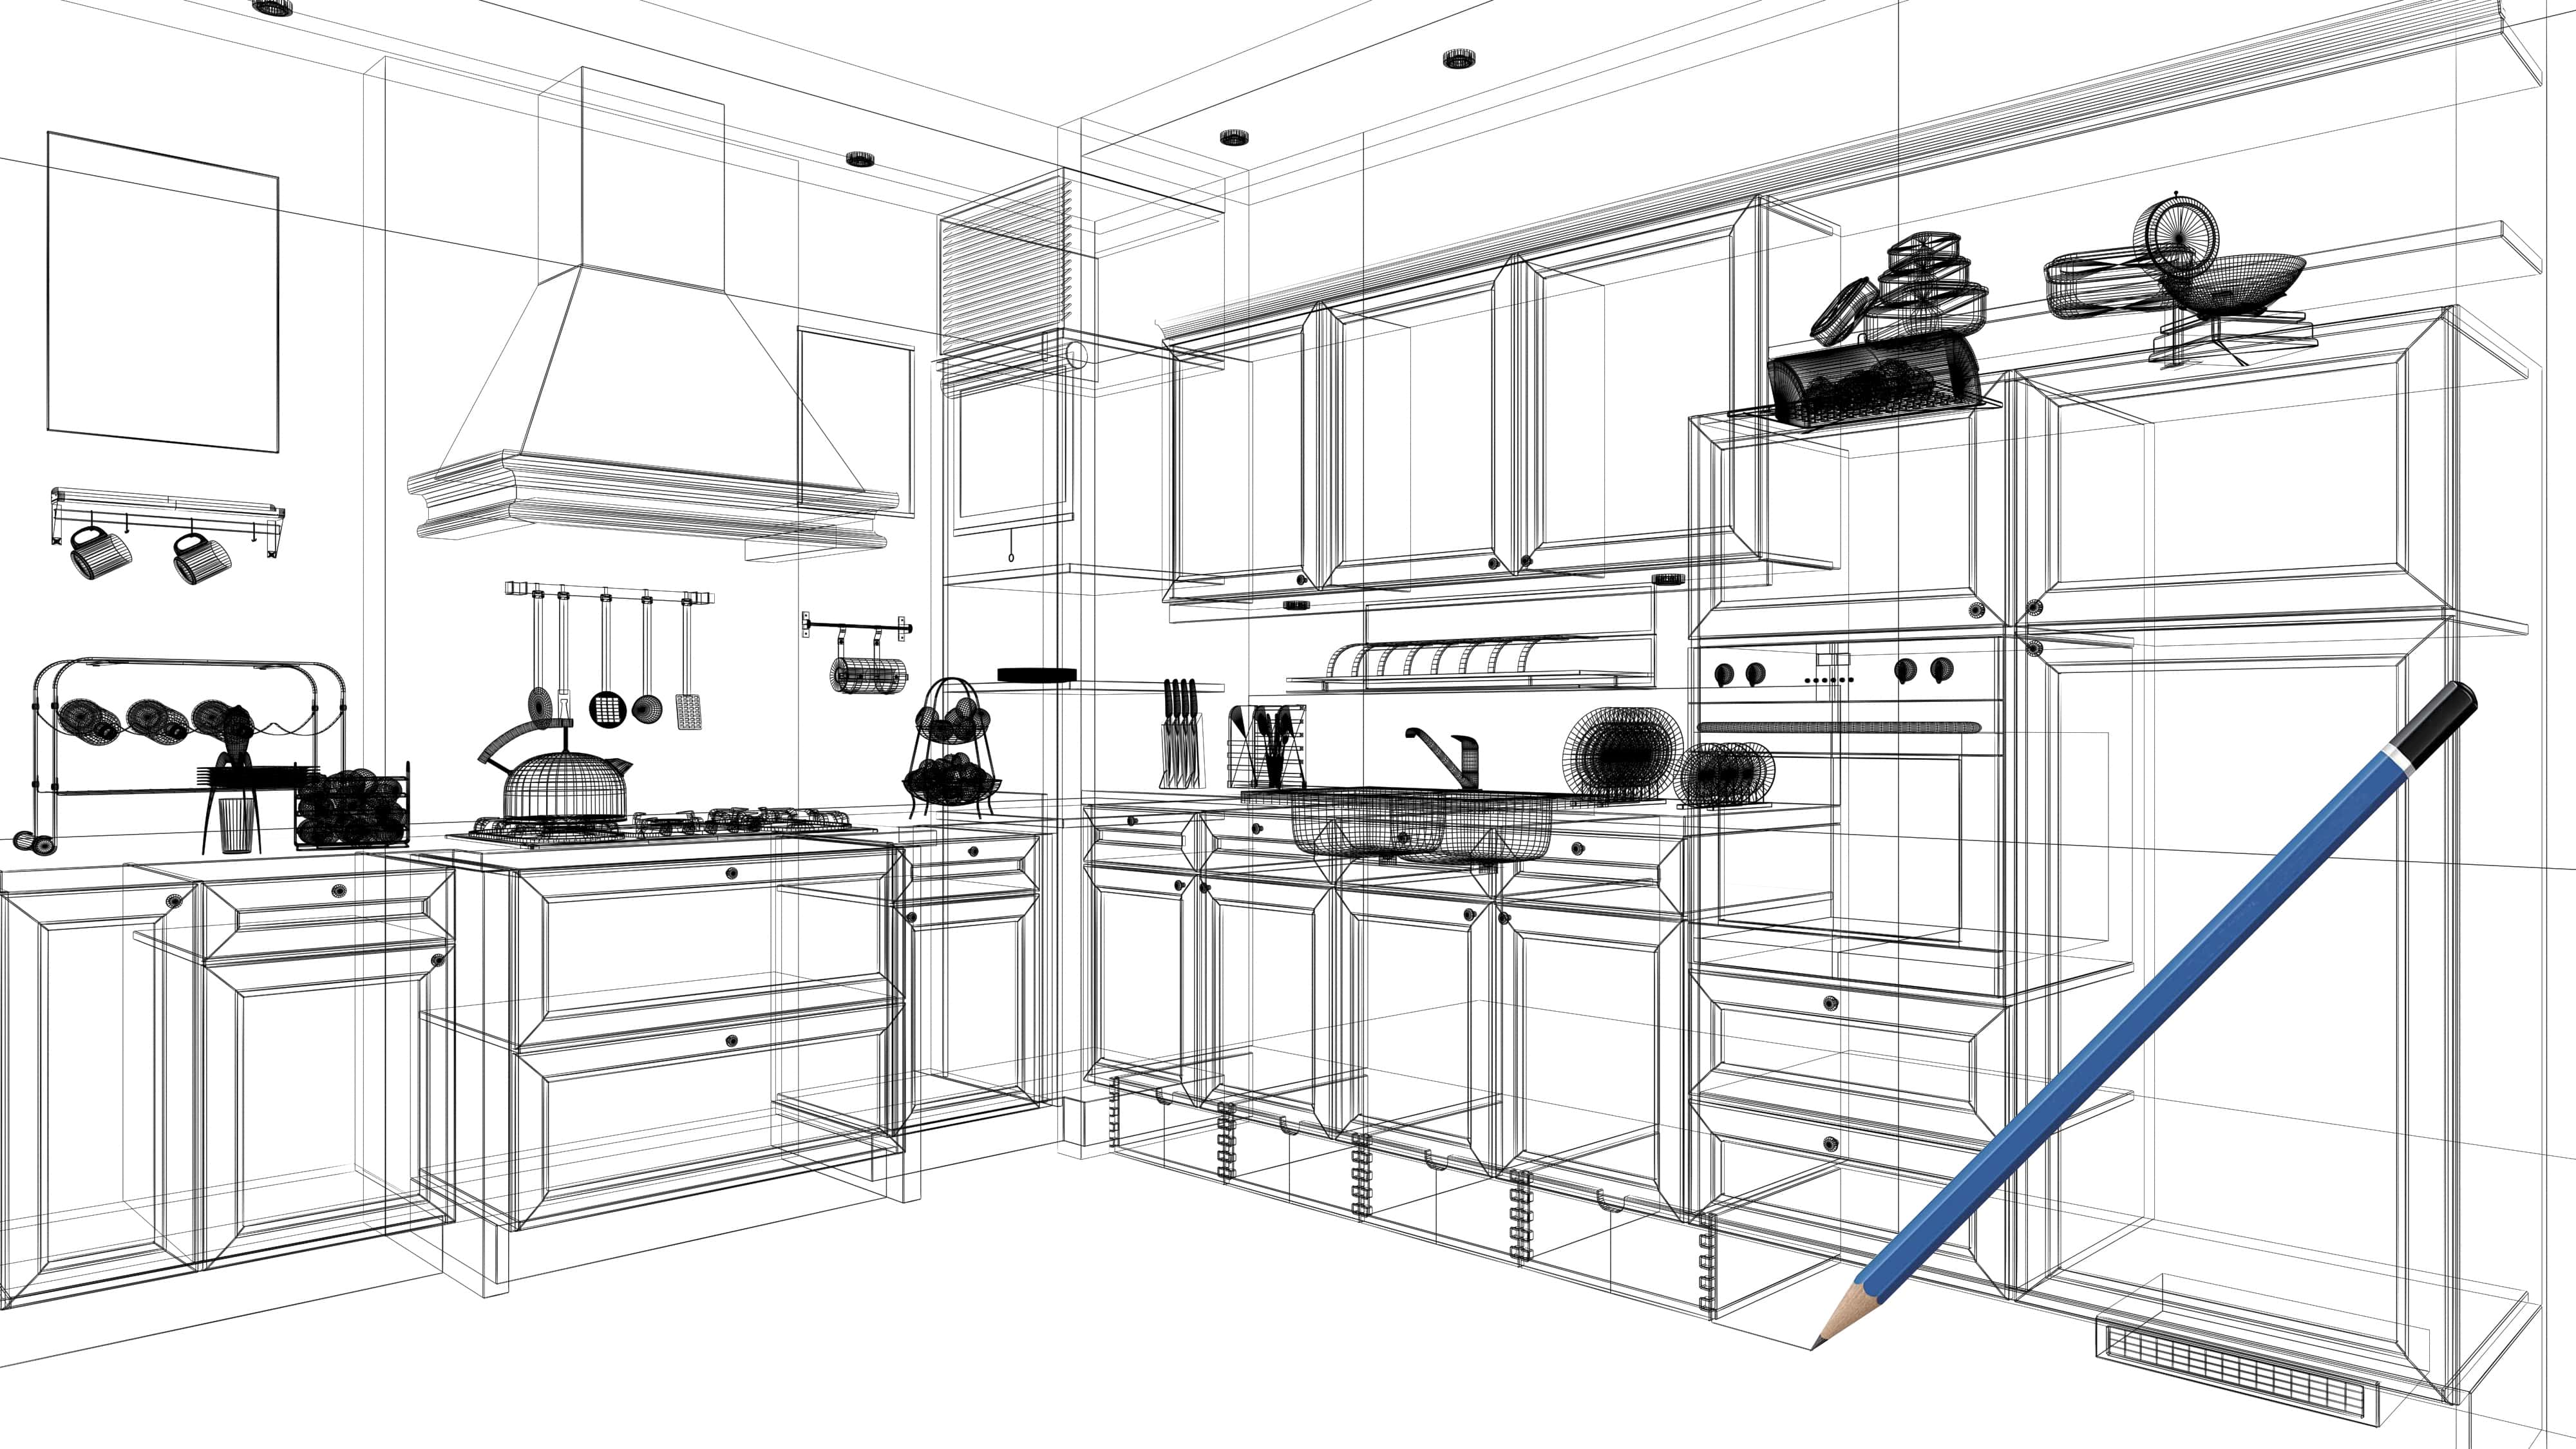 Kitchen layout - HomeLane Blog